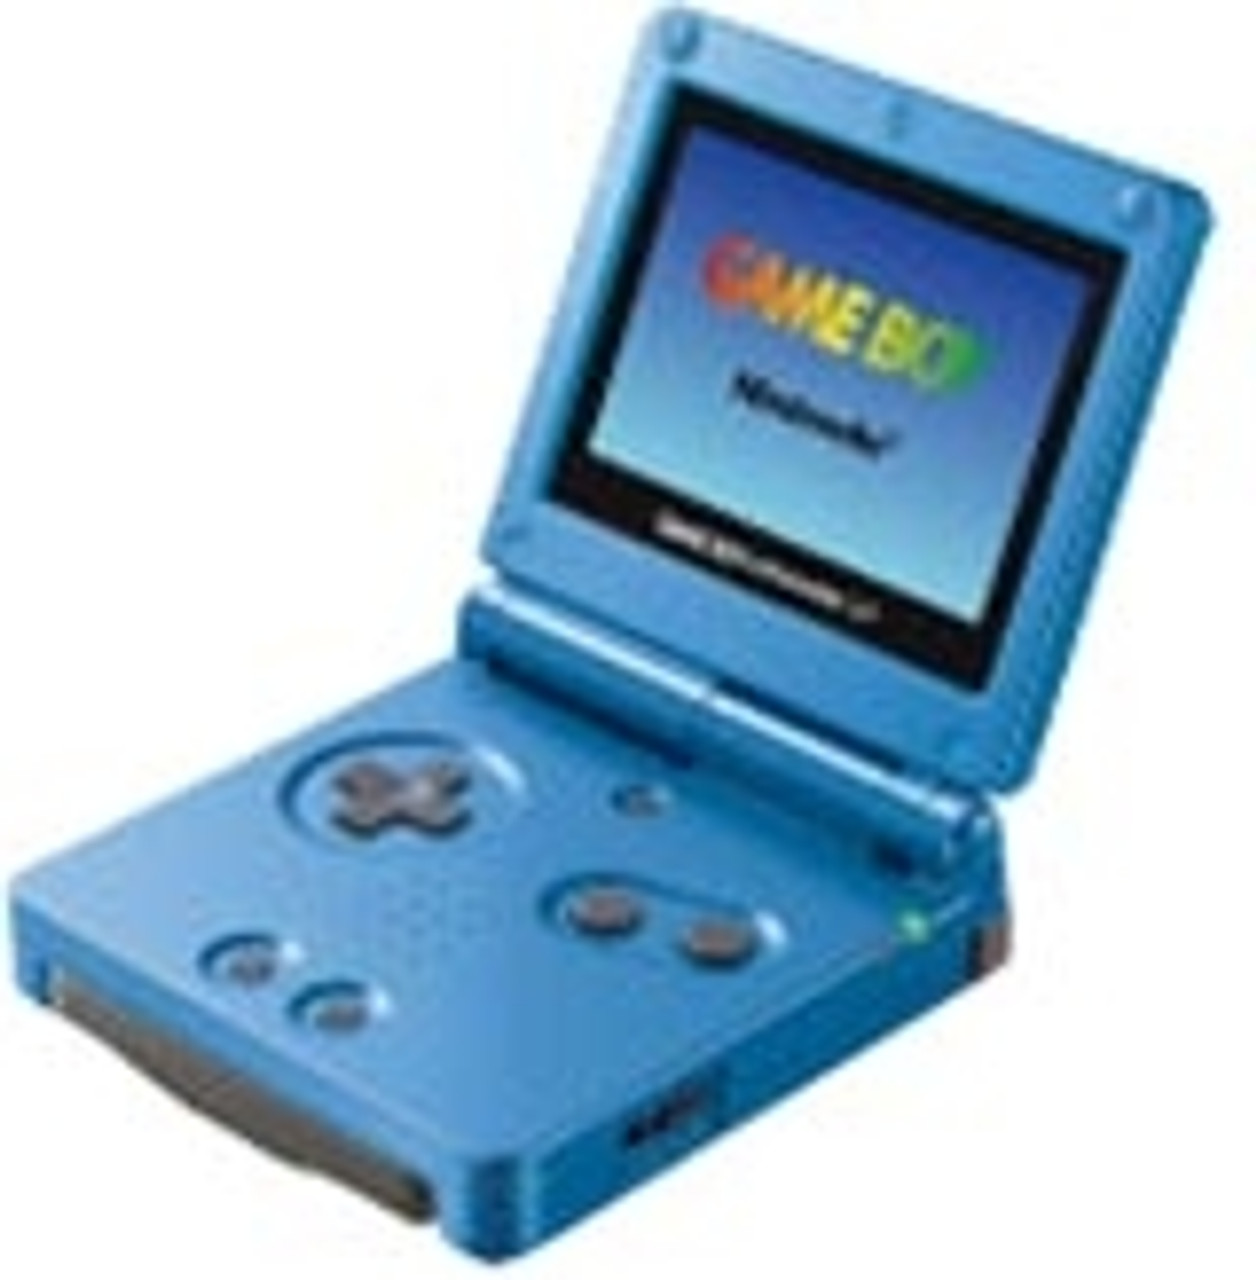 Nintendo Gameboy Advance SP Blue - Video games & consoles